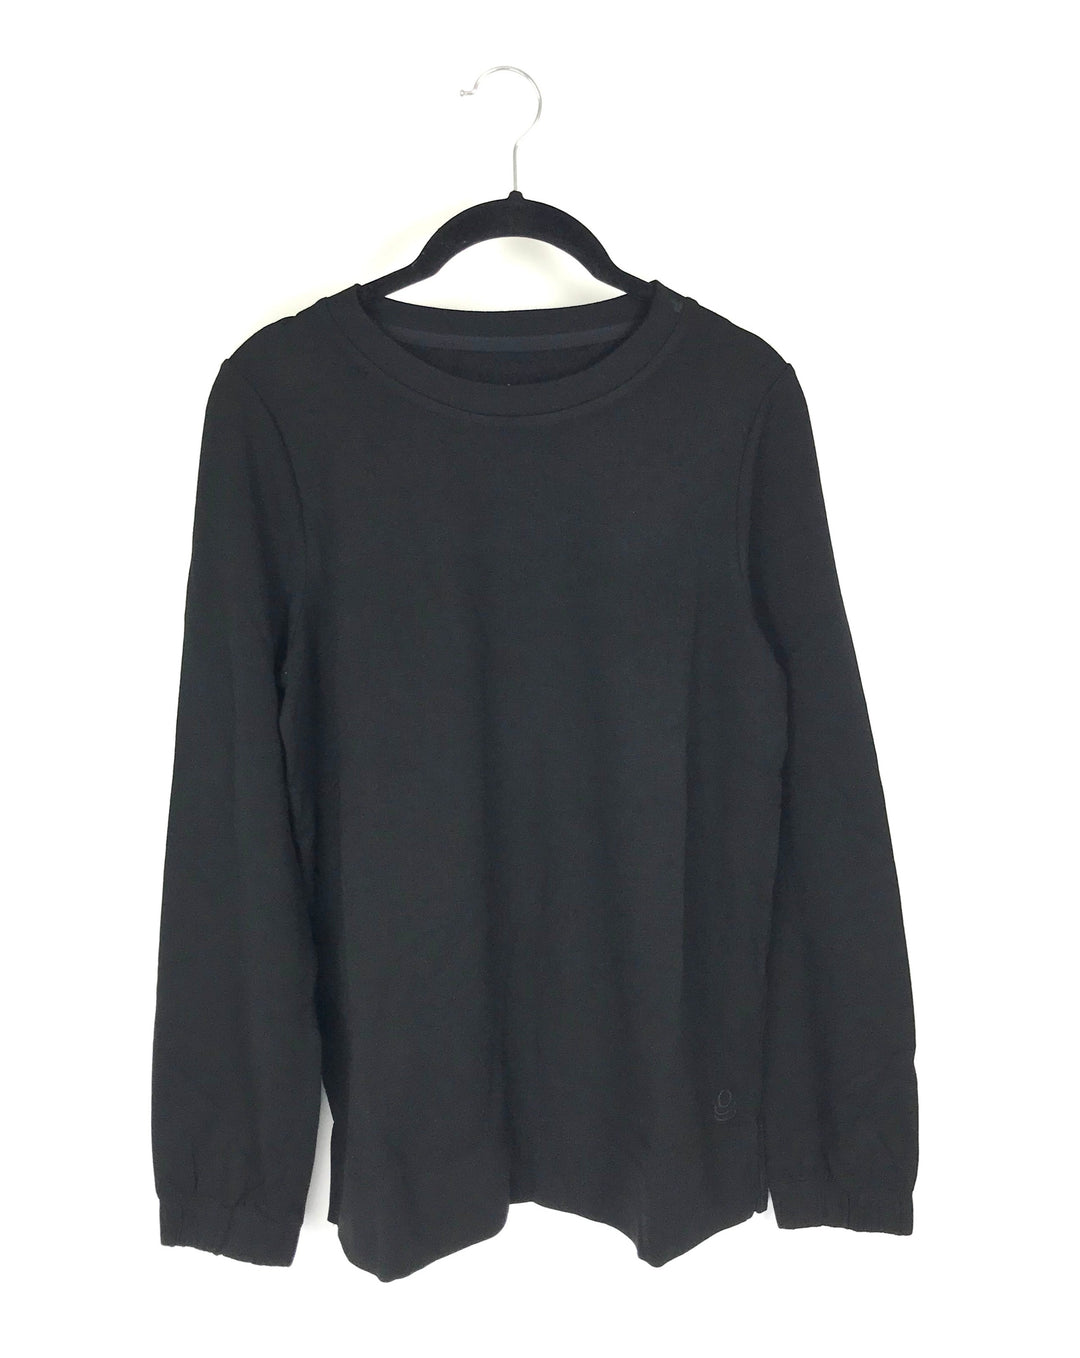 Black Long Sleeve Sweater - Small